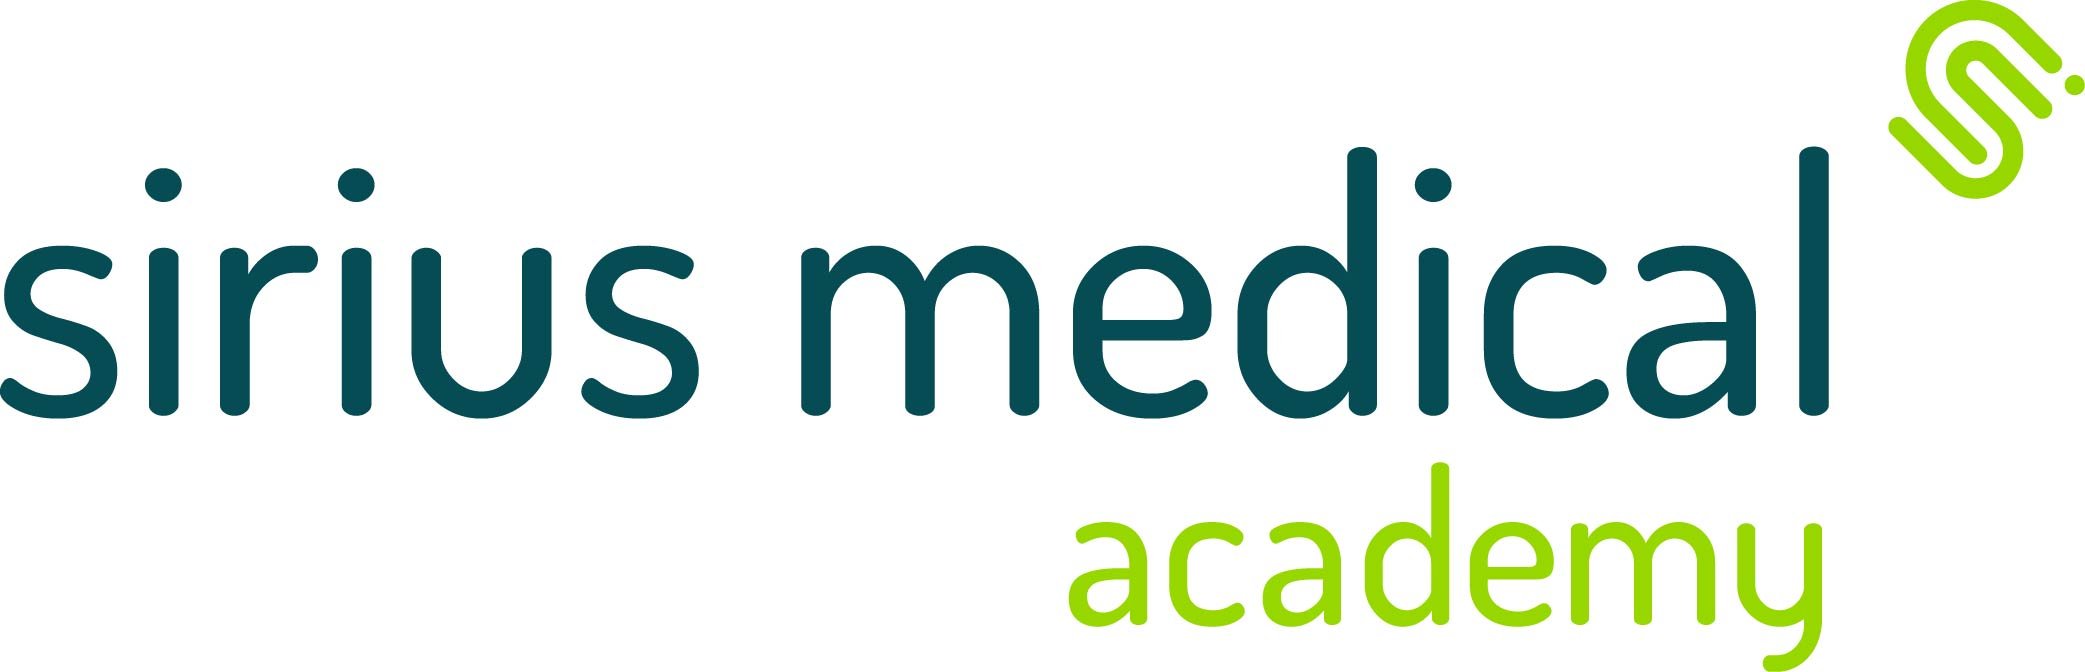 Sirius medical academy